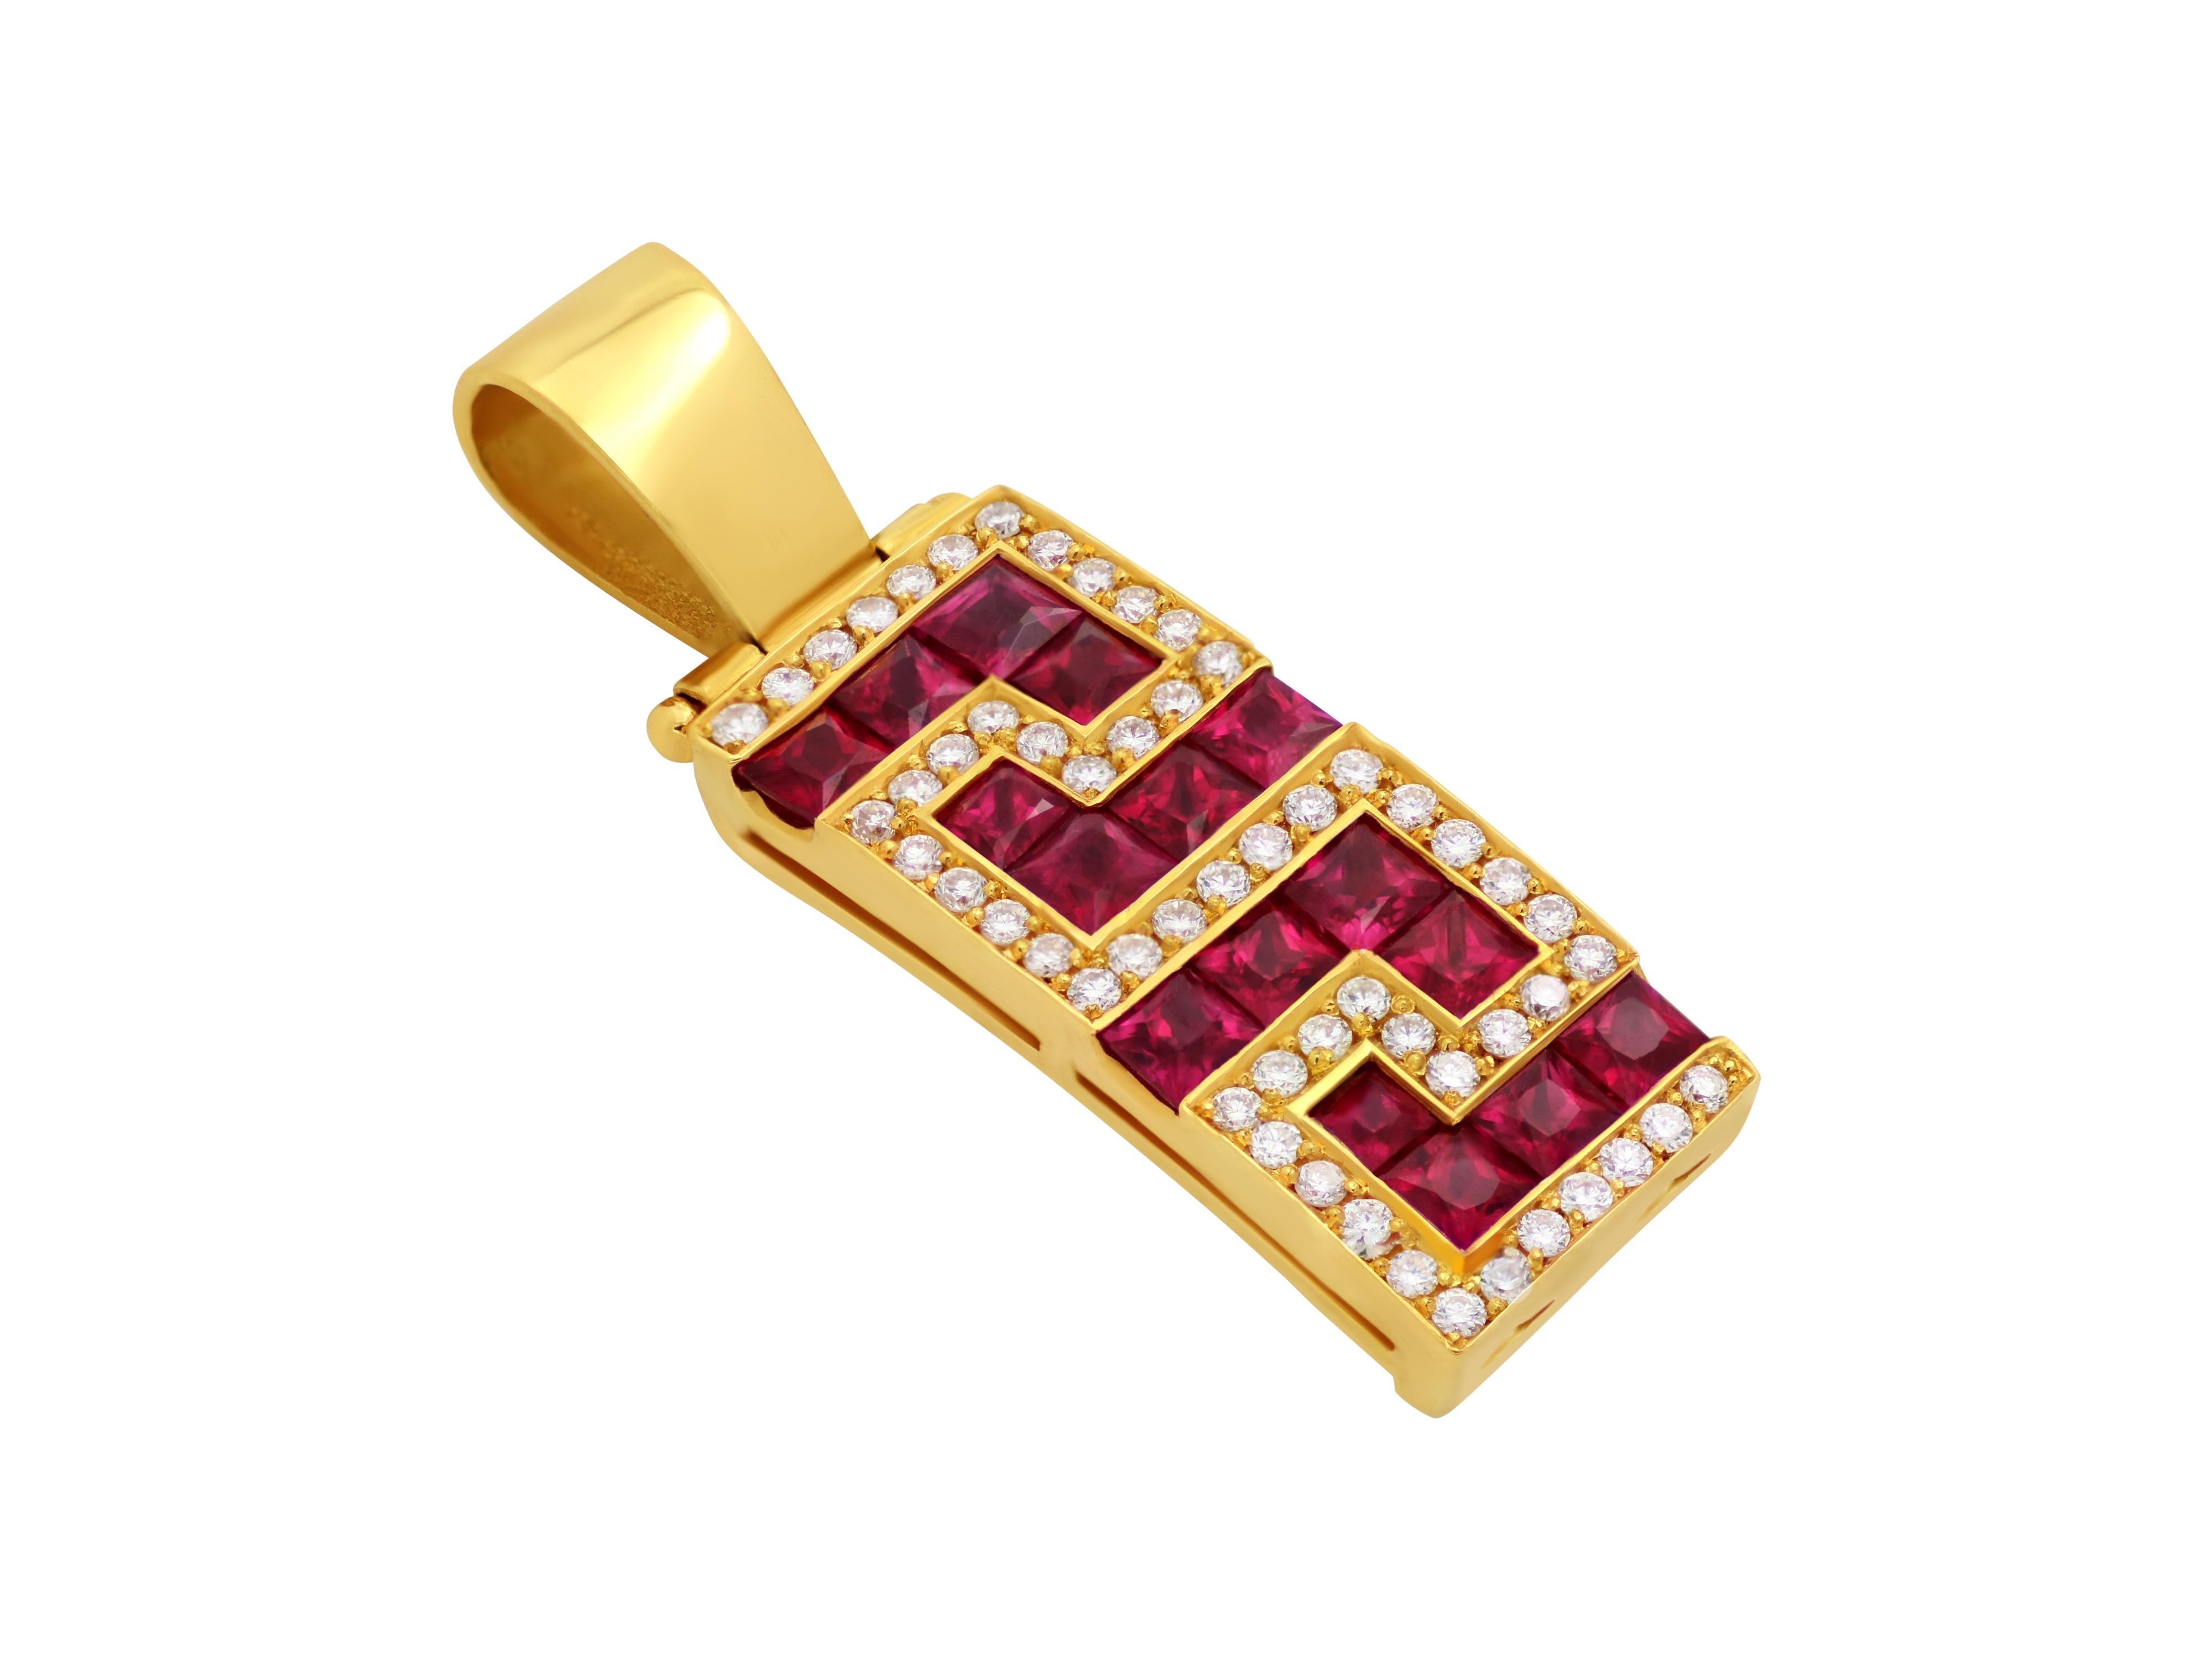 Princess Cut Dimos 18k Gold Greek Key Cocktail Rubies and Diamonds Pendant For Sale